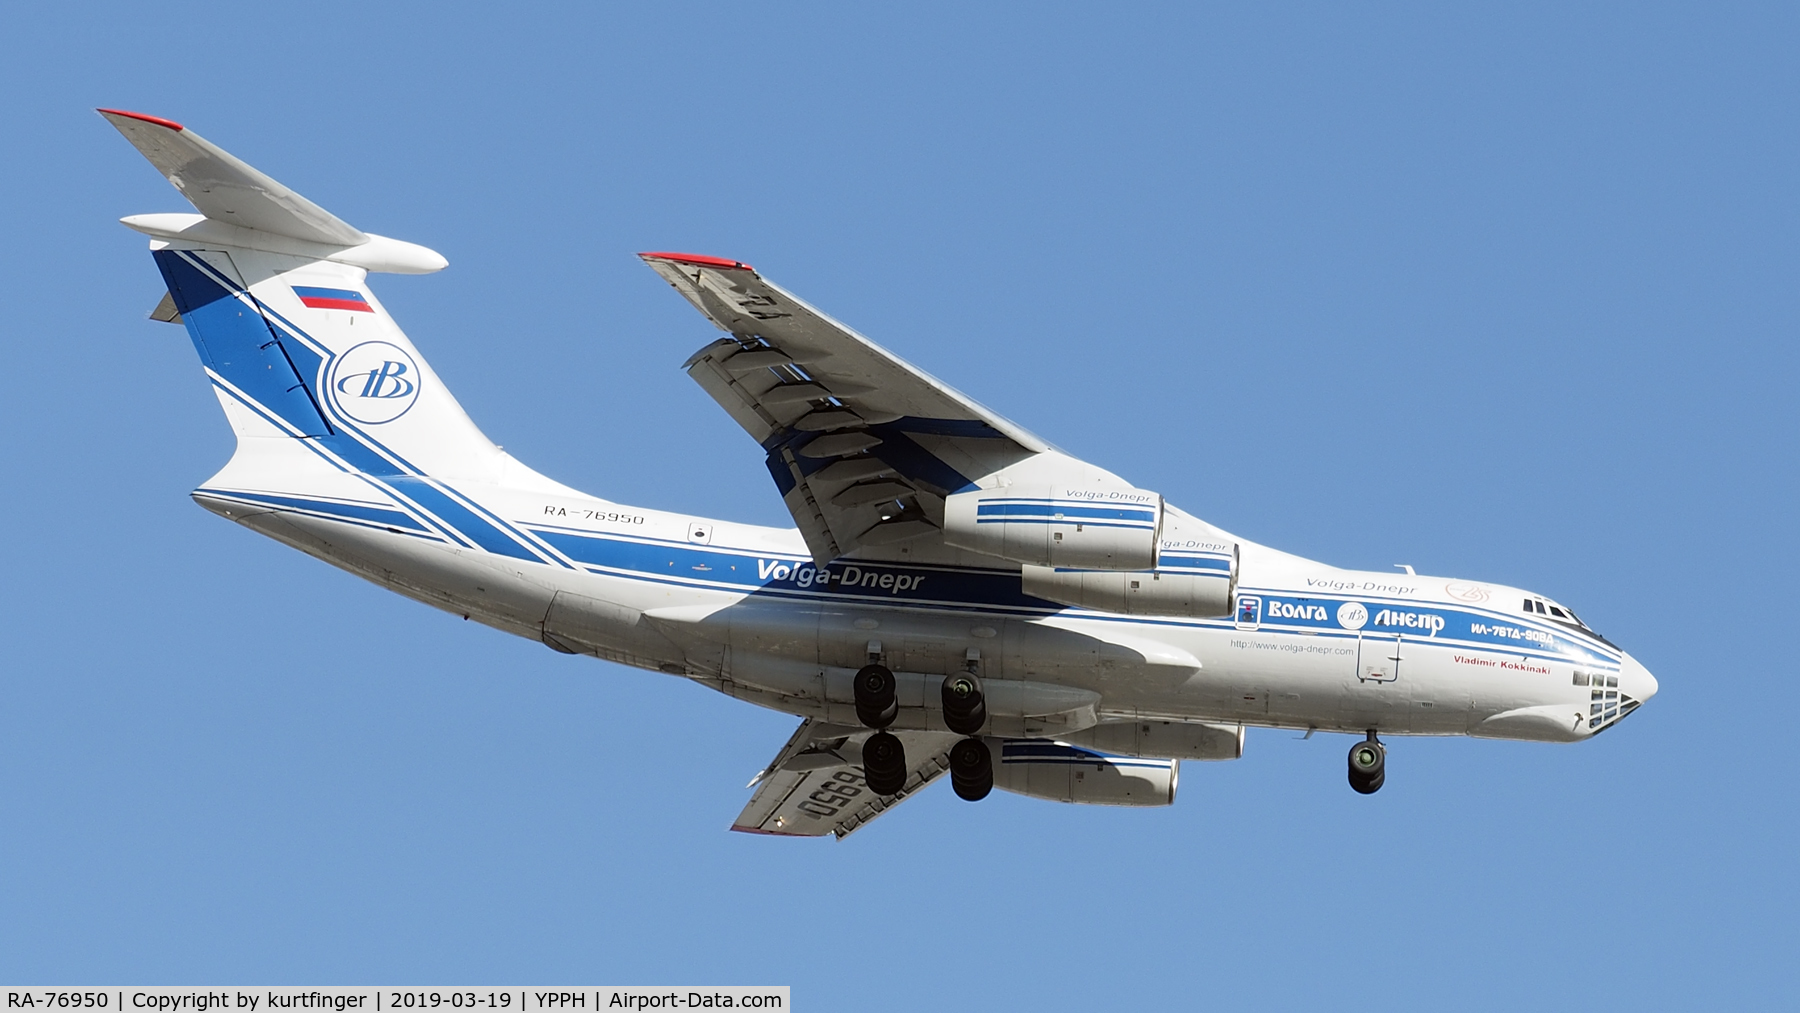 RA-76950, 2004 Ilyushin Il-76TD-90VD C/N 2043420697, Ilyushin IL-76ID-90VD Volga-Dnepr Airlines RA-76950 15/03/19.
Final runway 21 YPPH.